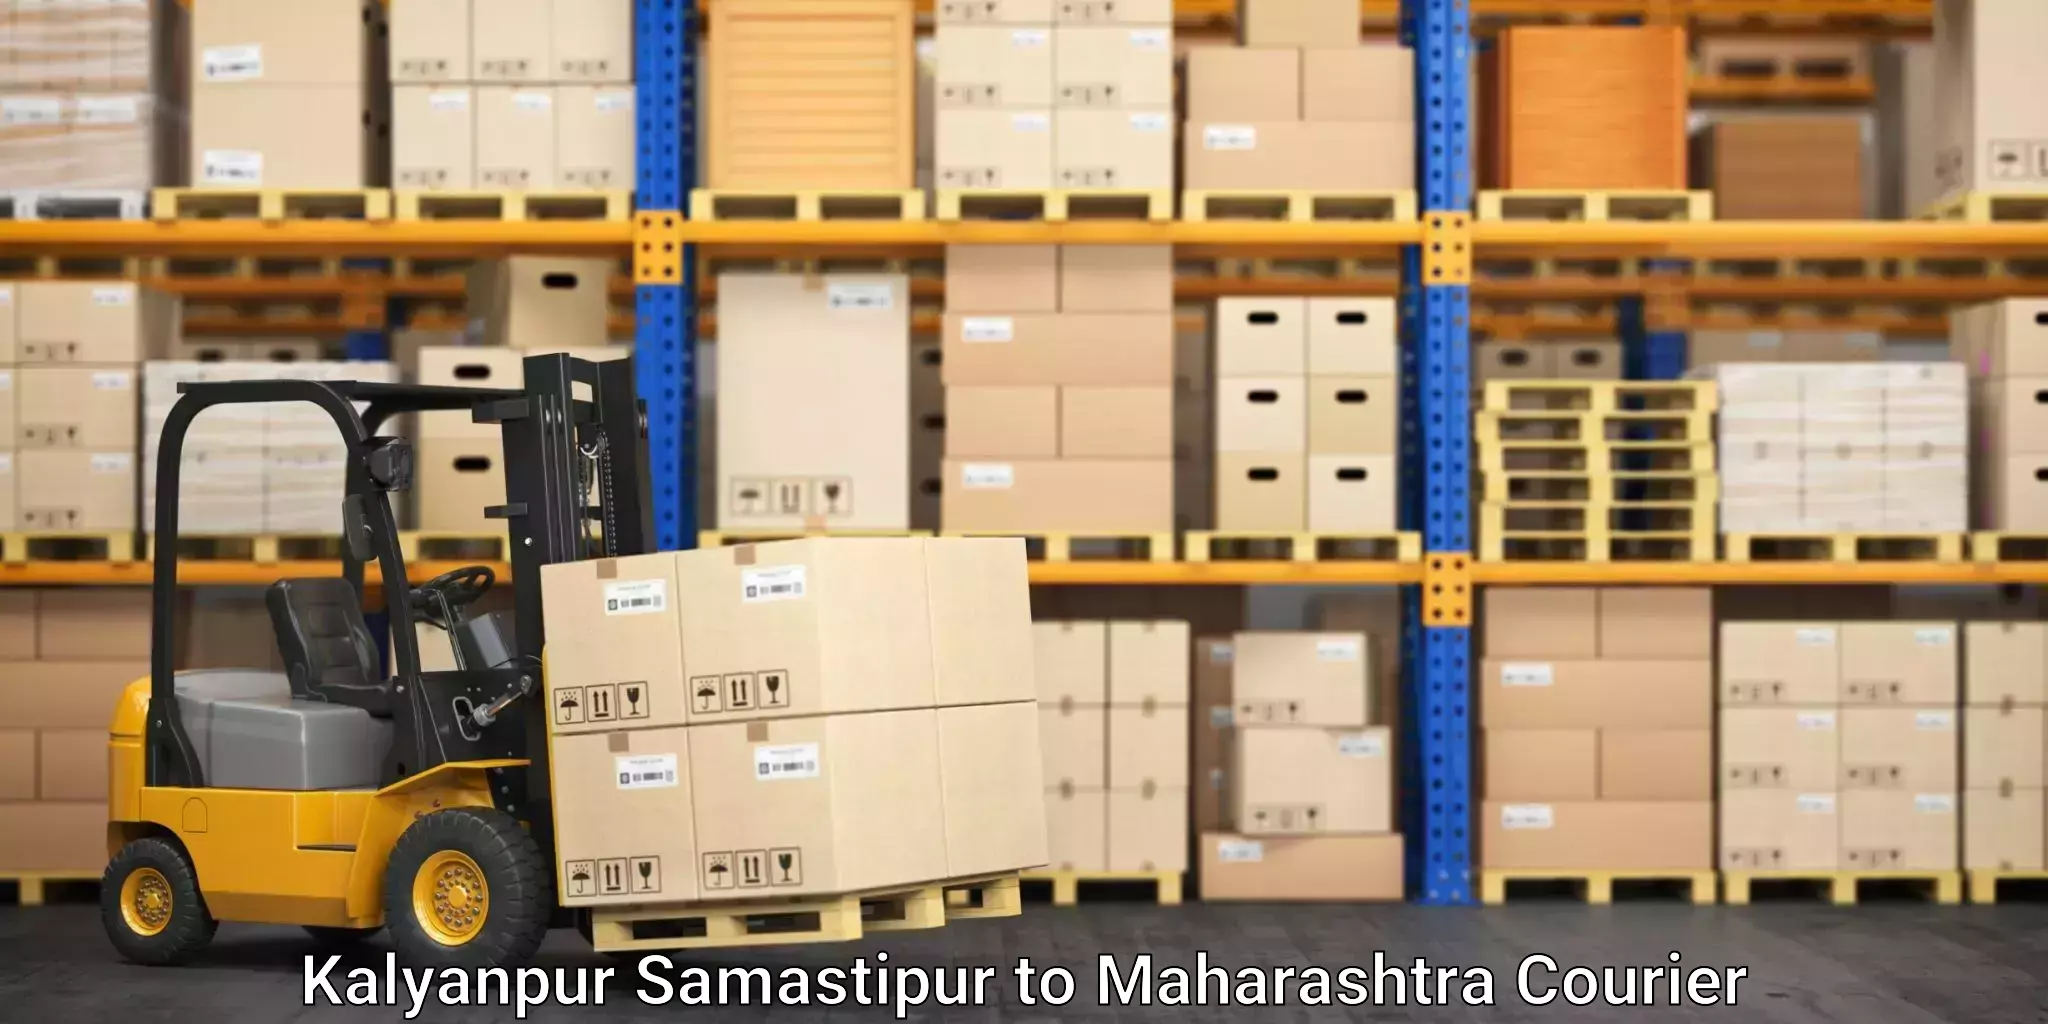 Furniture moving assistance in Kalyanpur Samastipur to Maharashtra